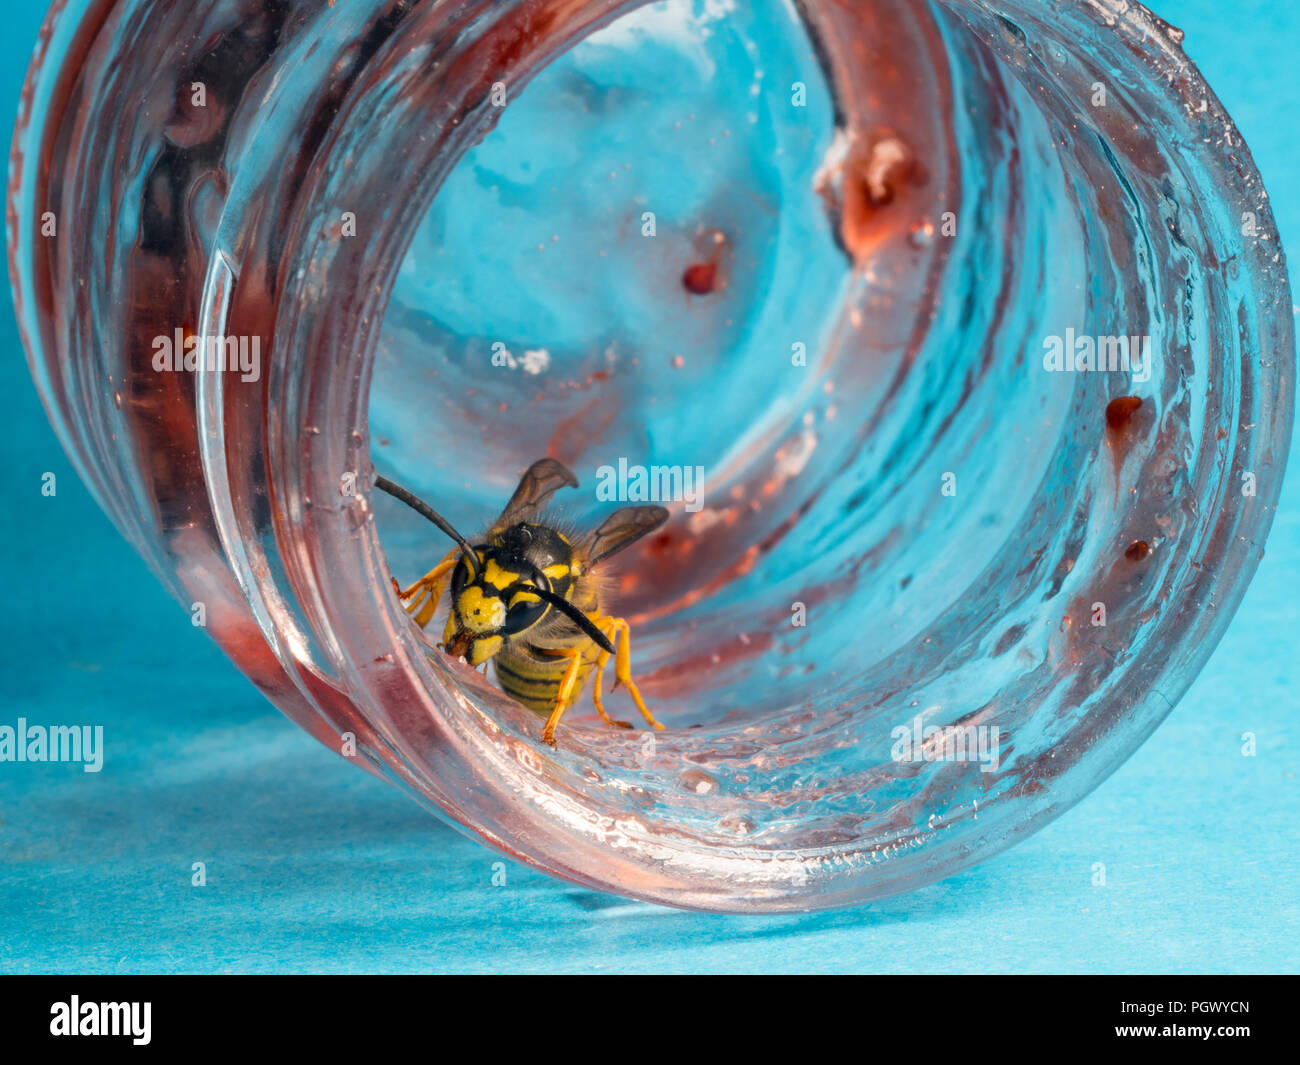 Common Wasp Vespula vulgaris feeding on raspberry jam Stock Photo